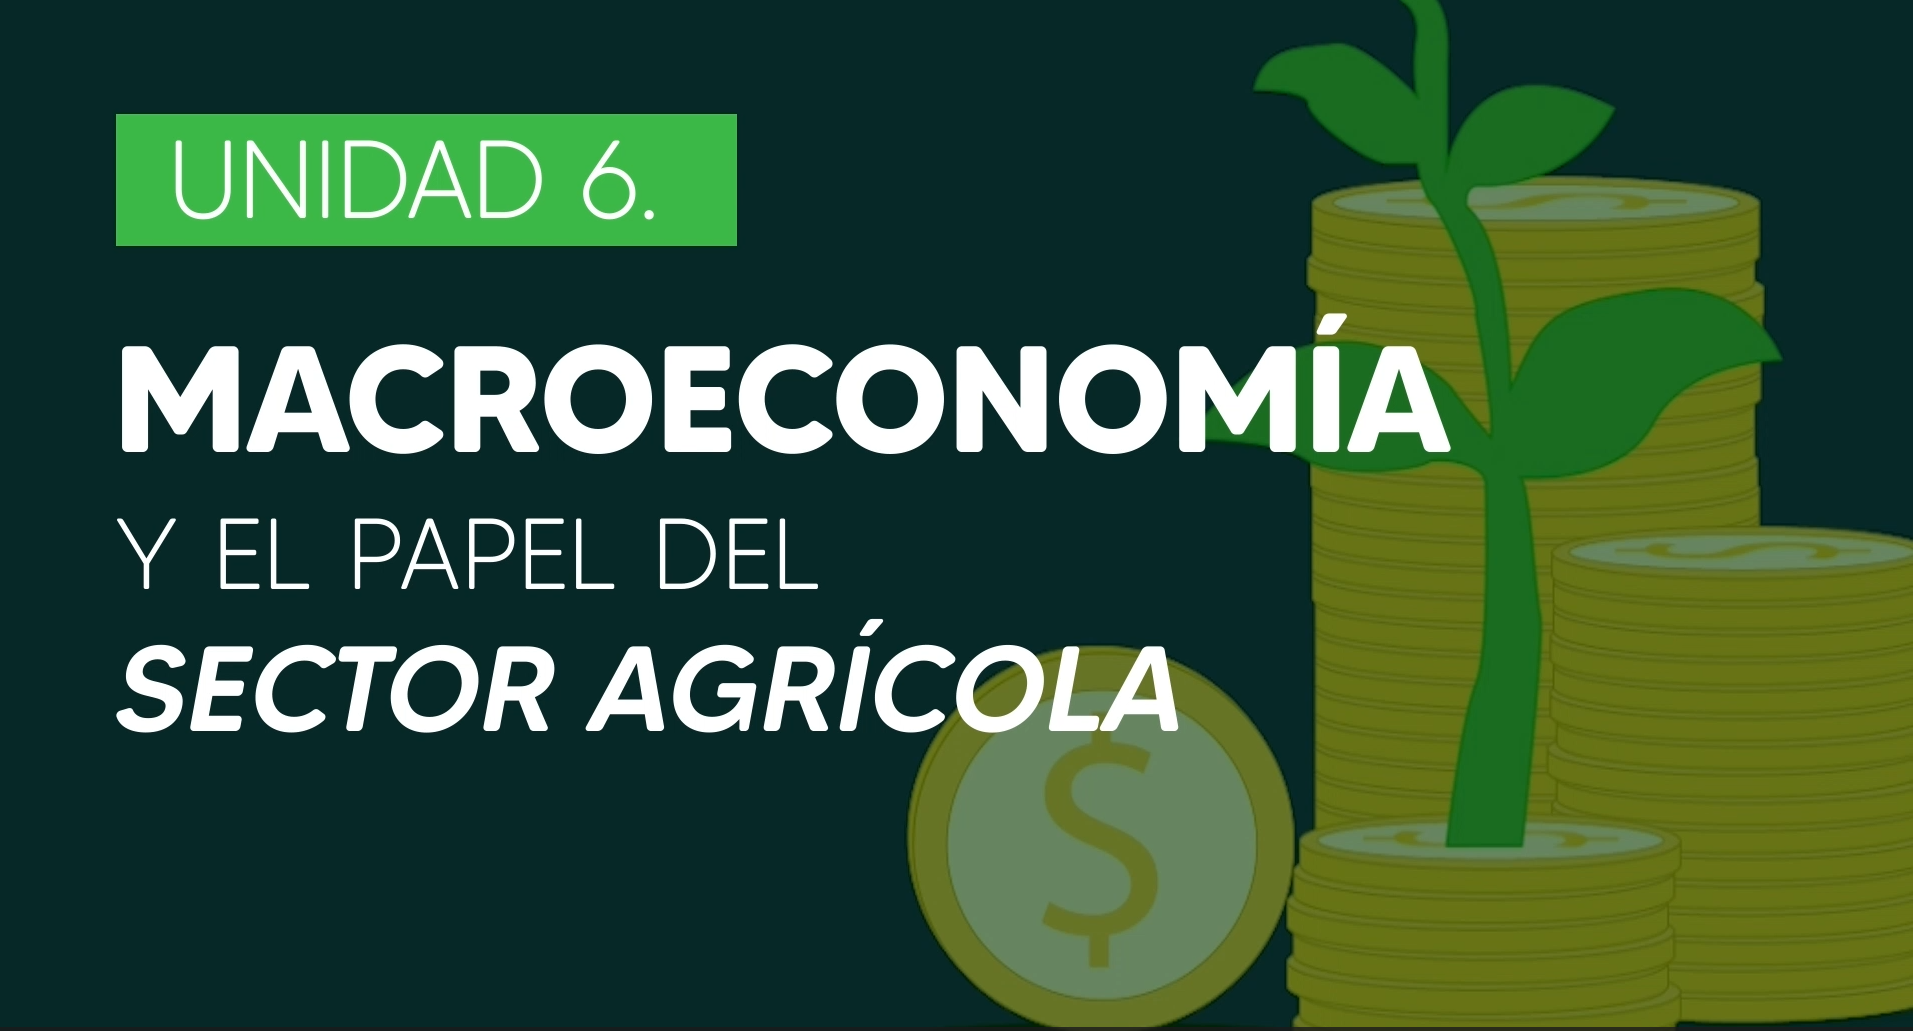 Portada_Macroeconomia.png